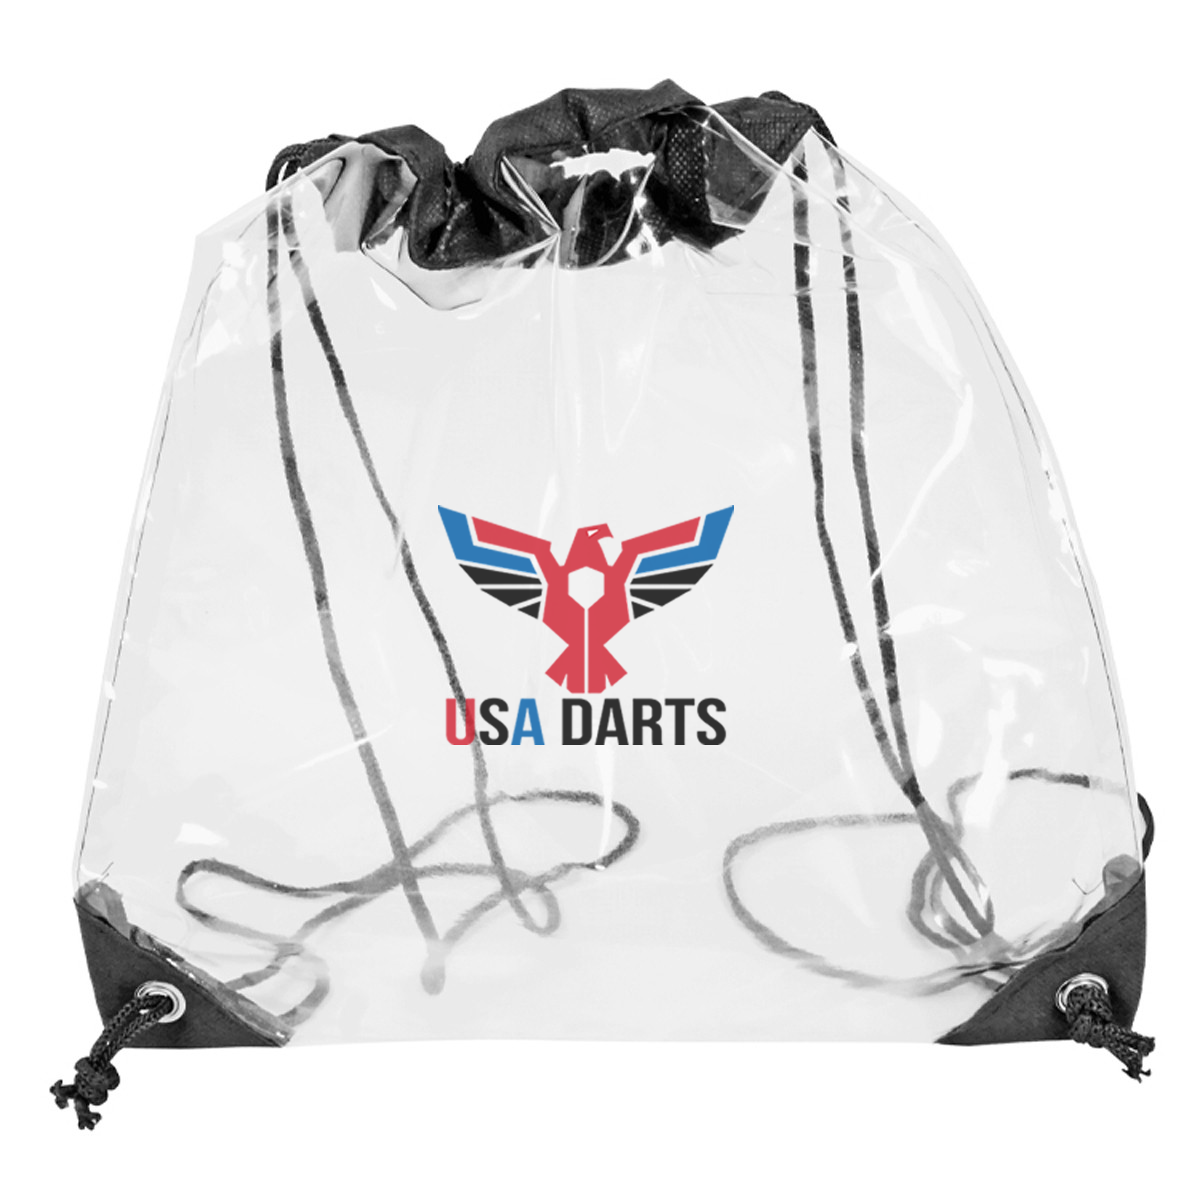 USA Darts Clear Stadium Drawstring Bag